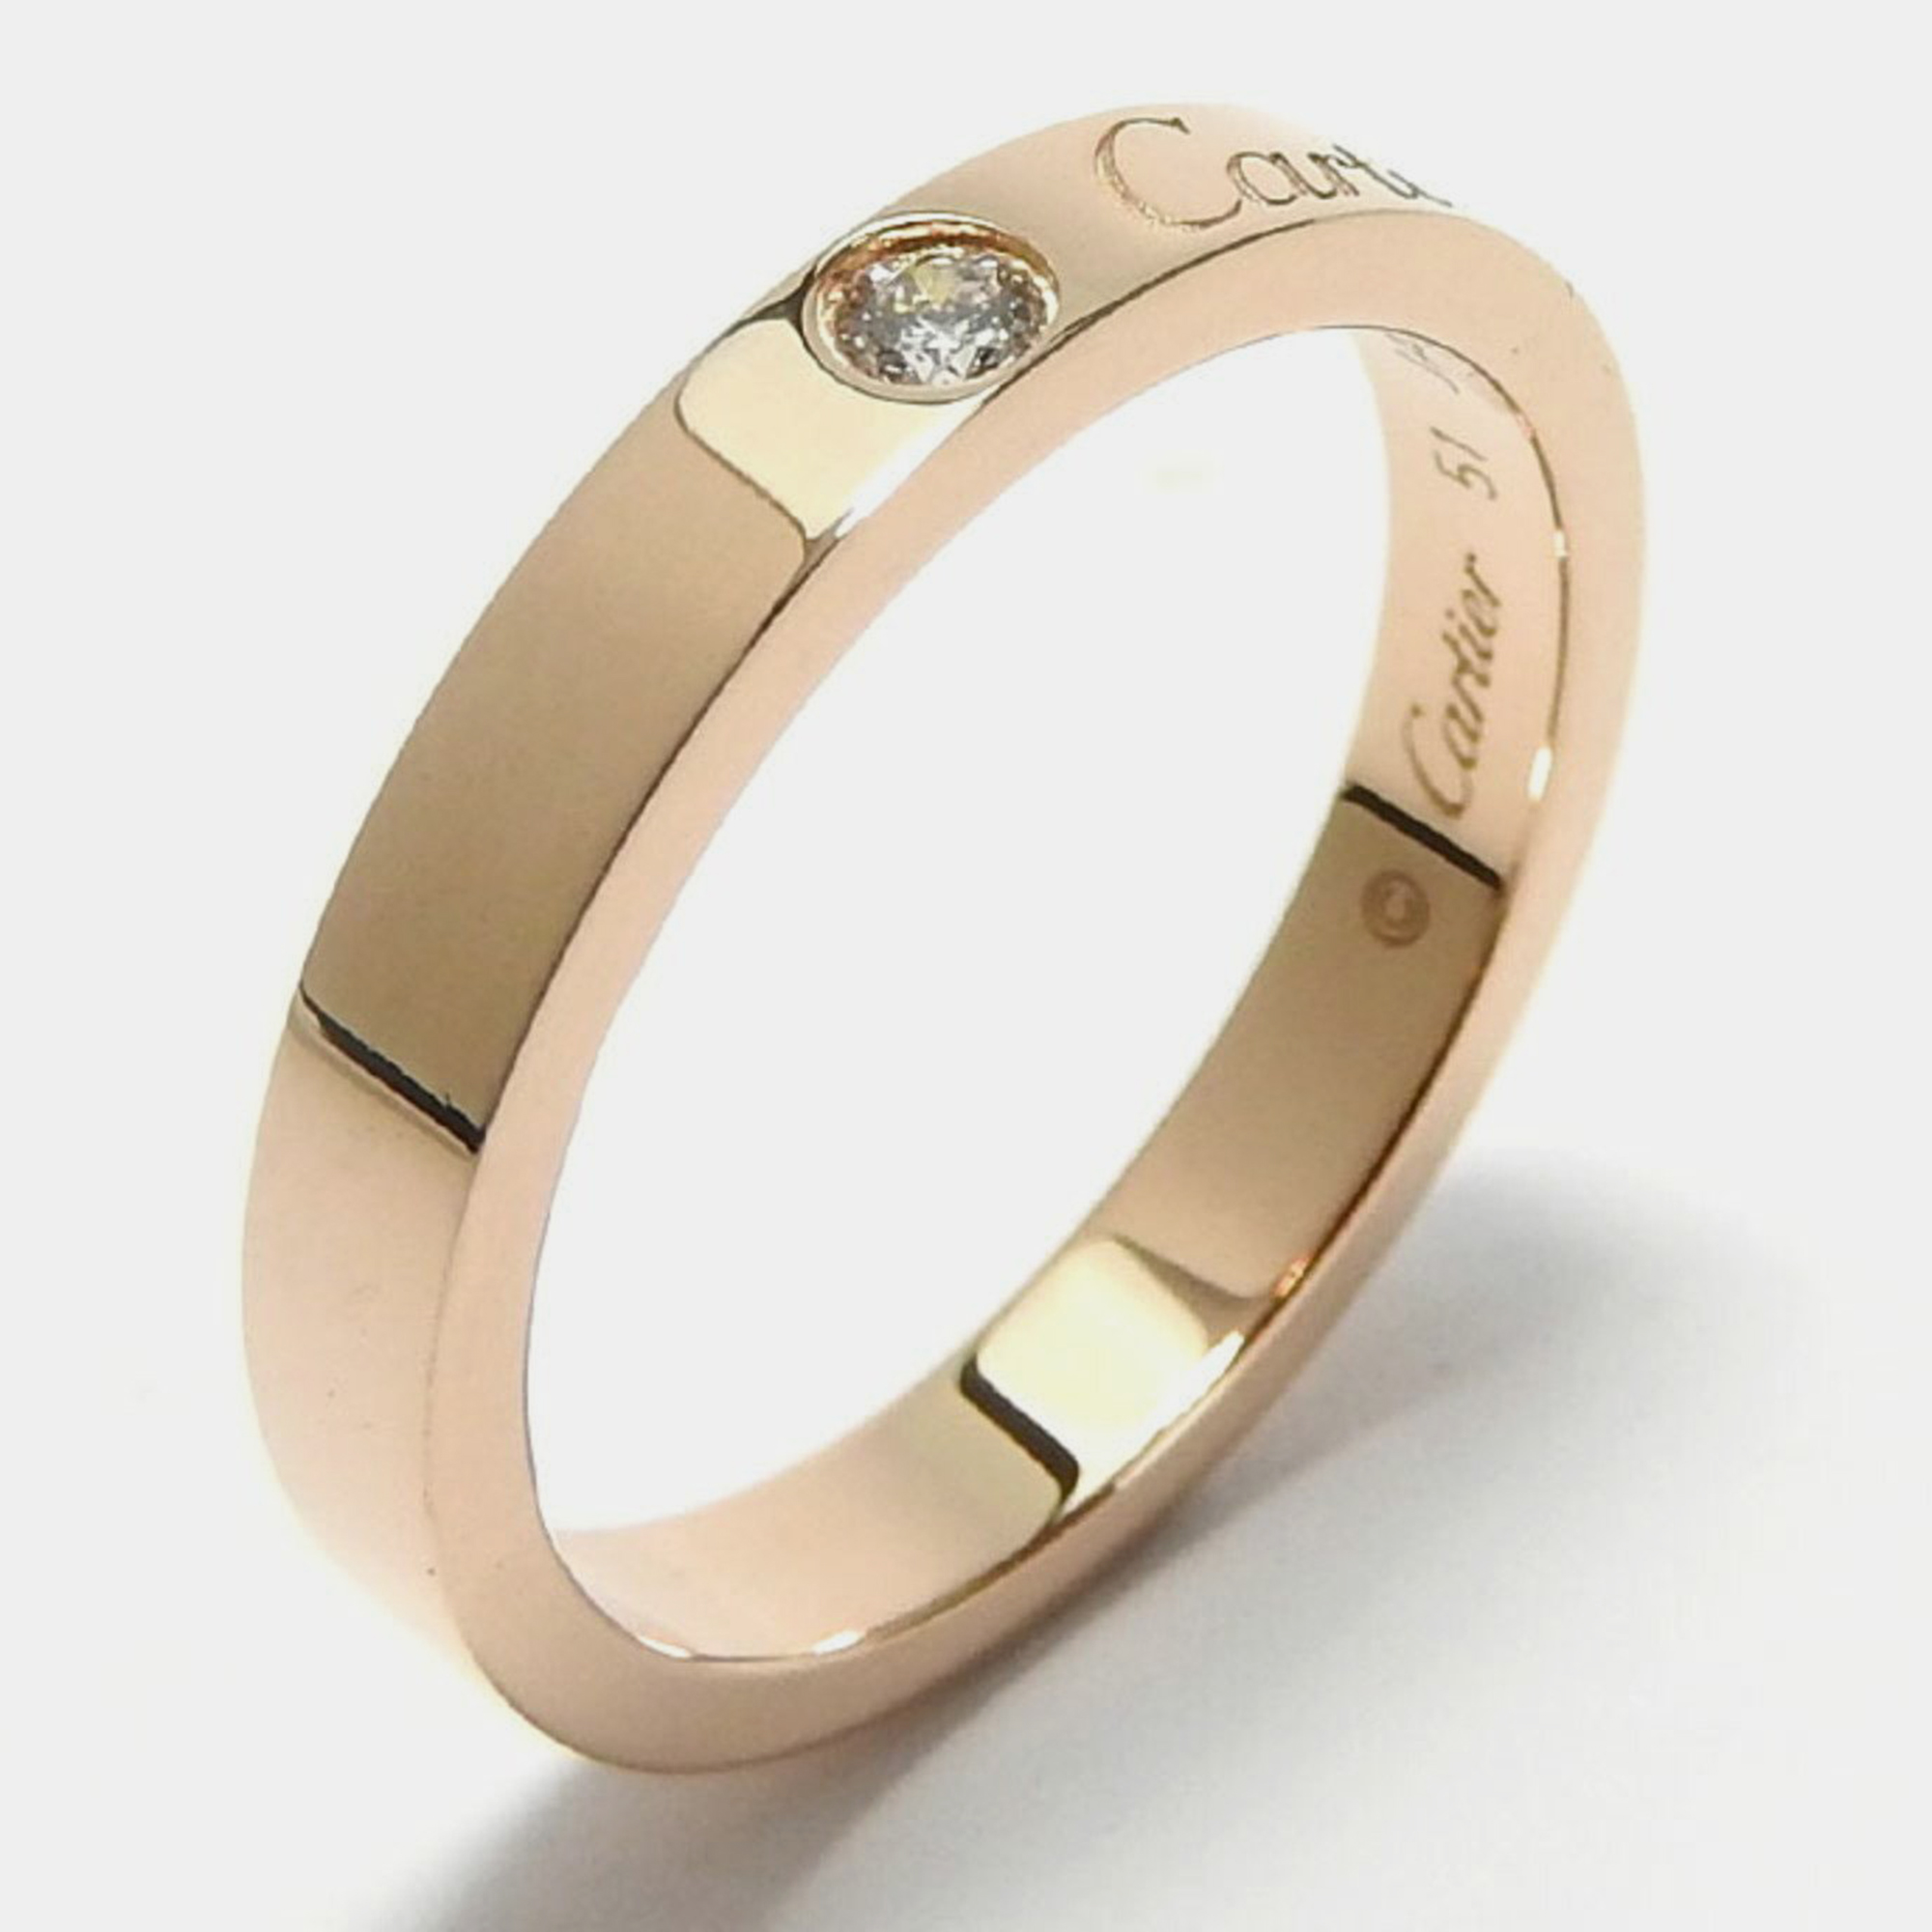 Cartier 18k rose gold and diamond c de cartier band ring eu 51